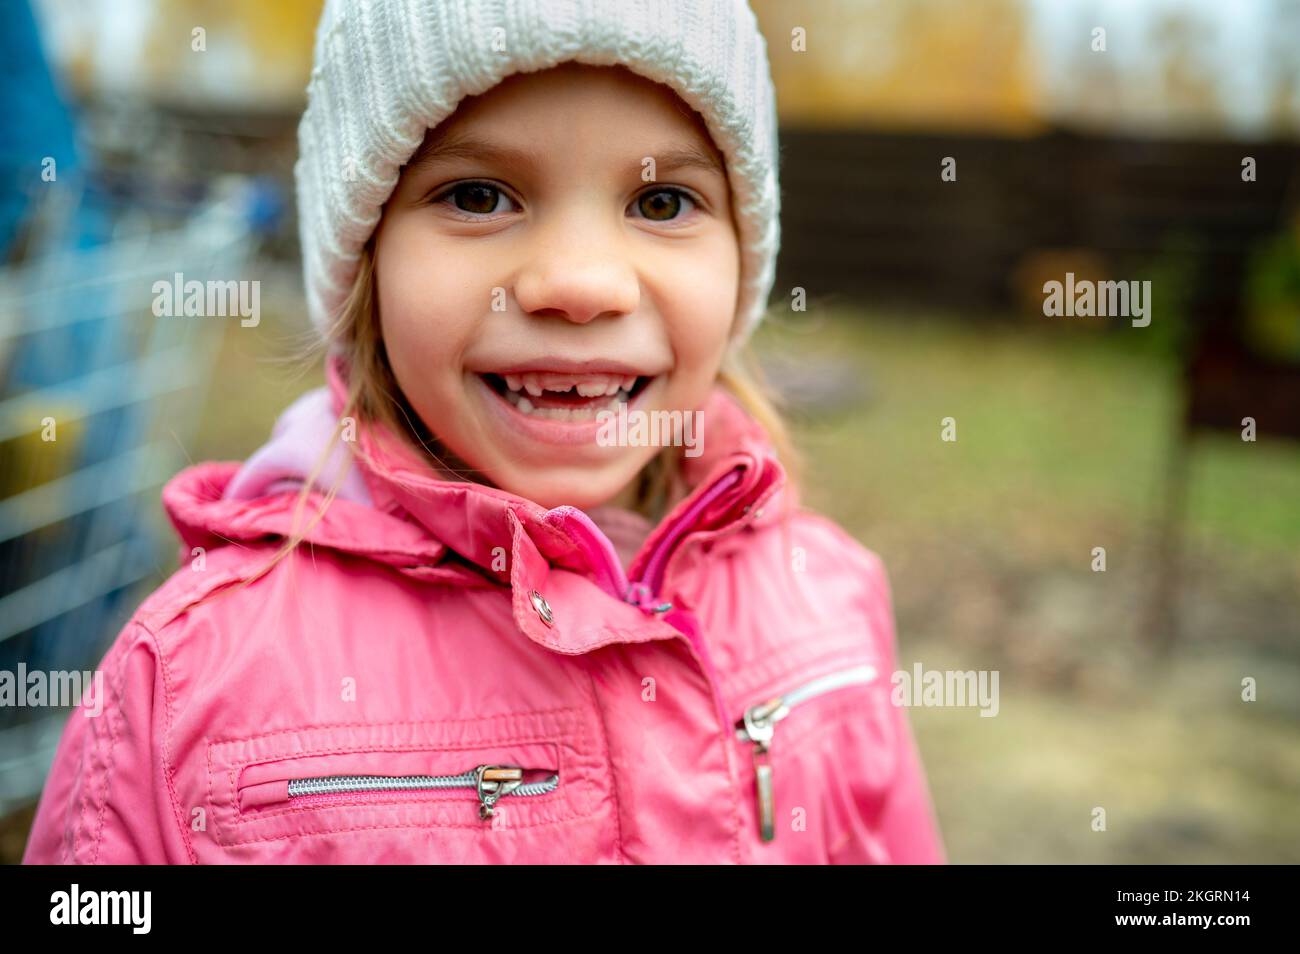 Happy girl wearing warm clothing Stock Photo